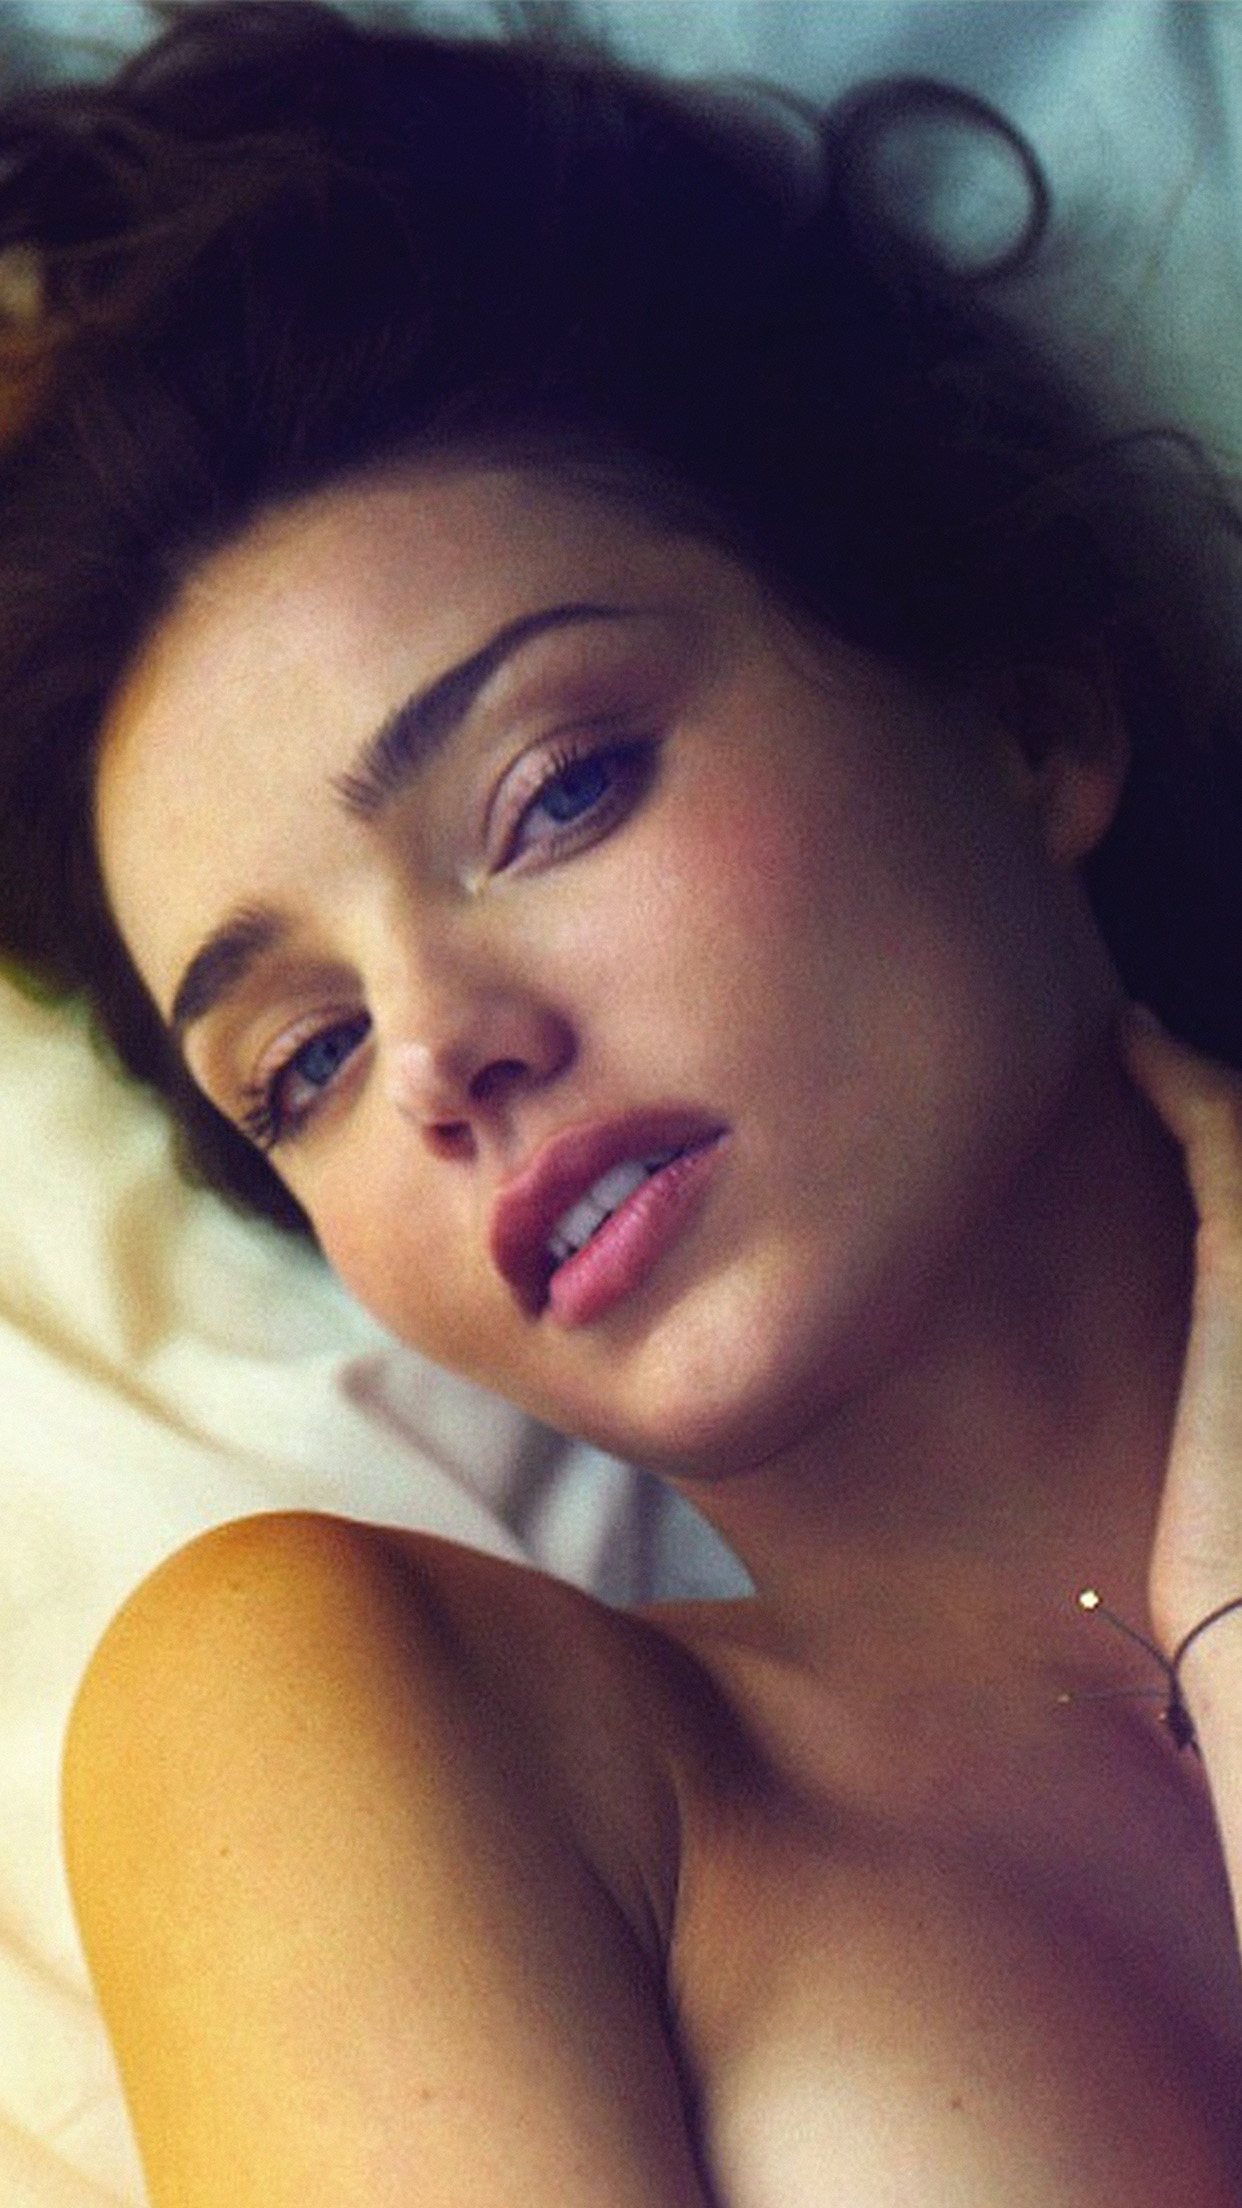 Miranda Kerr Bed Model Celebrity Woman Android wallpaper